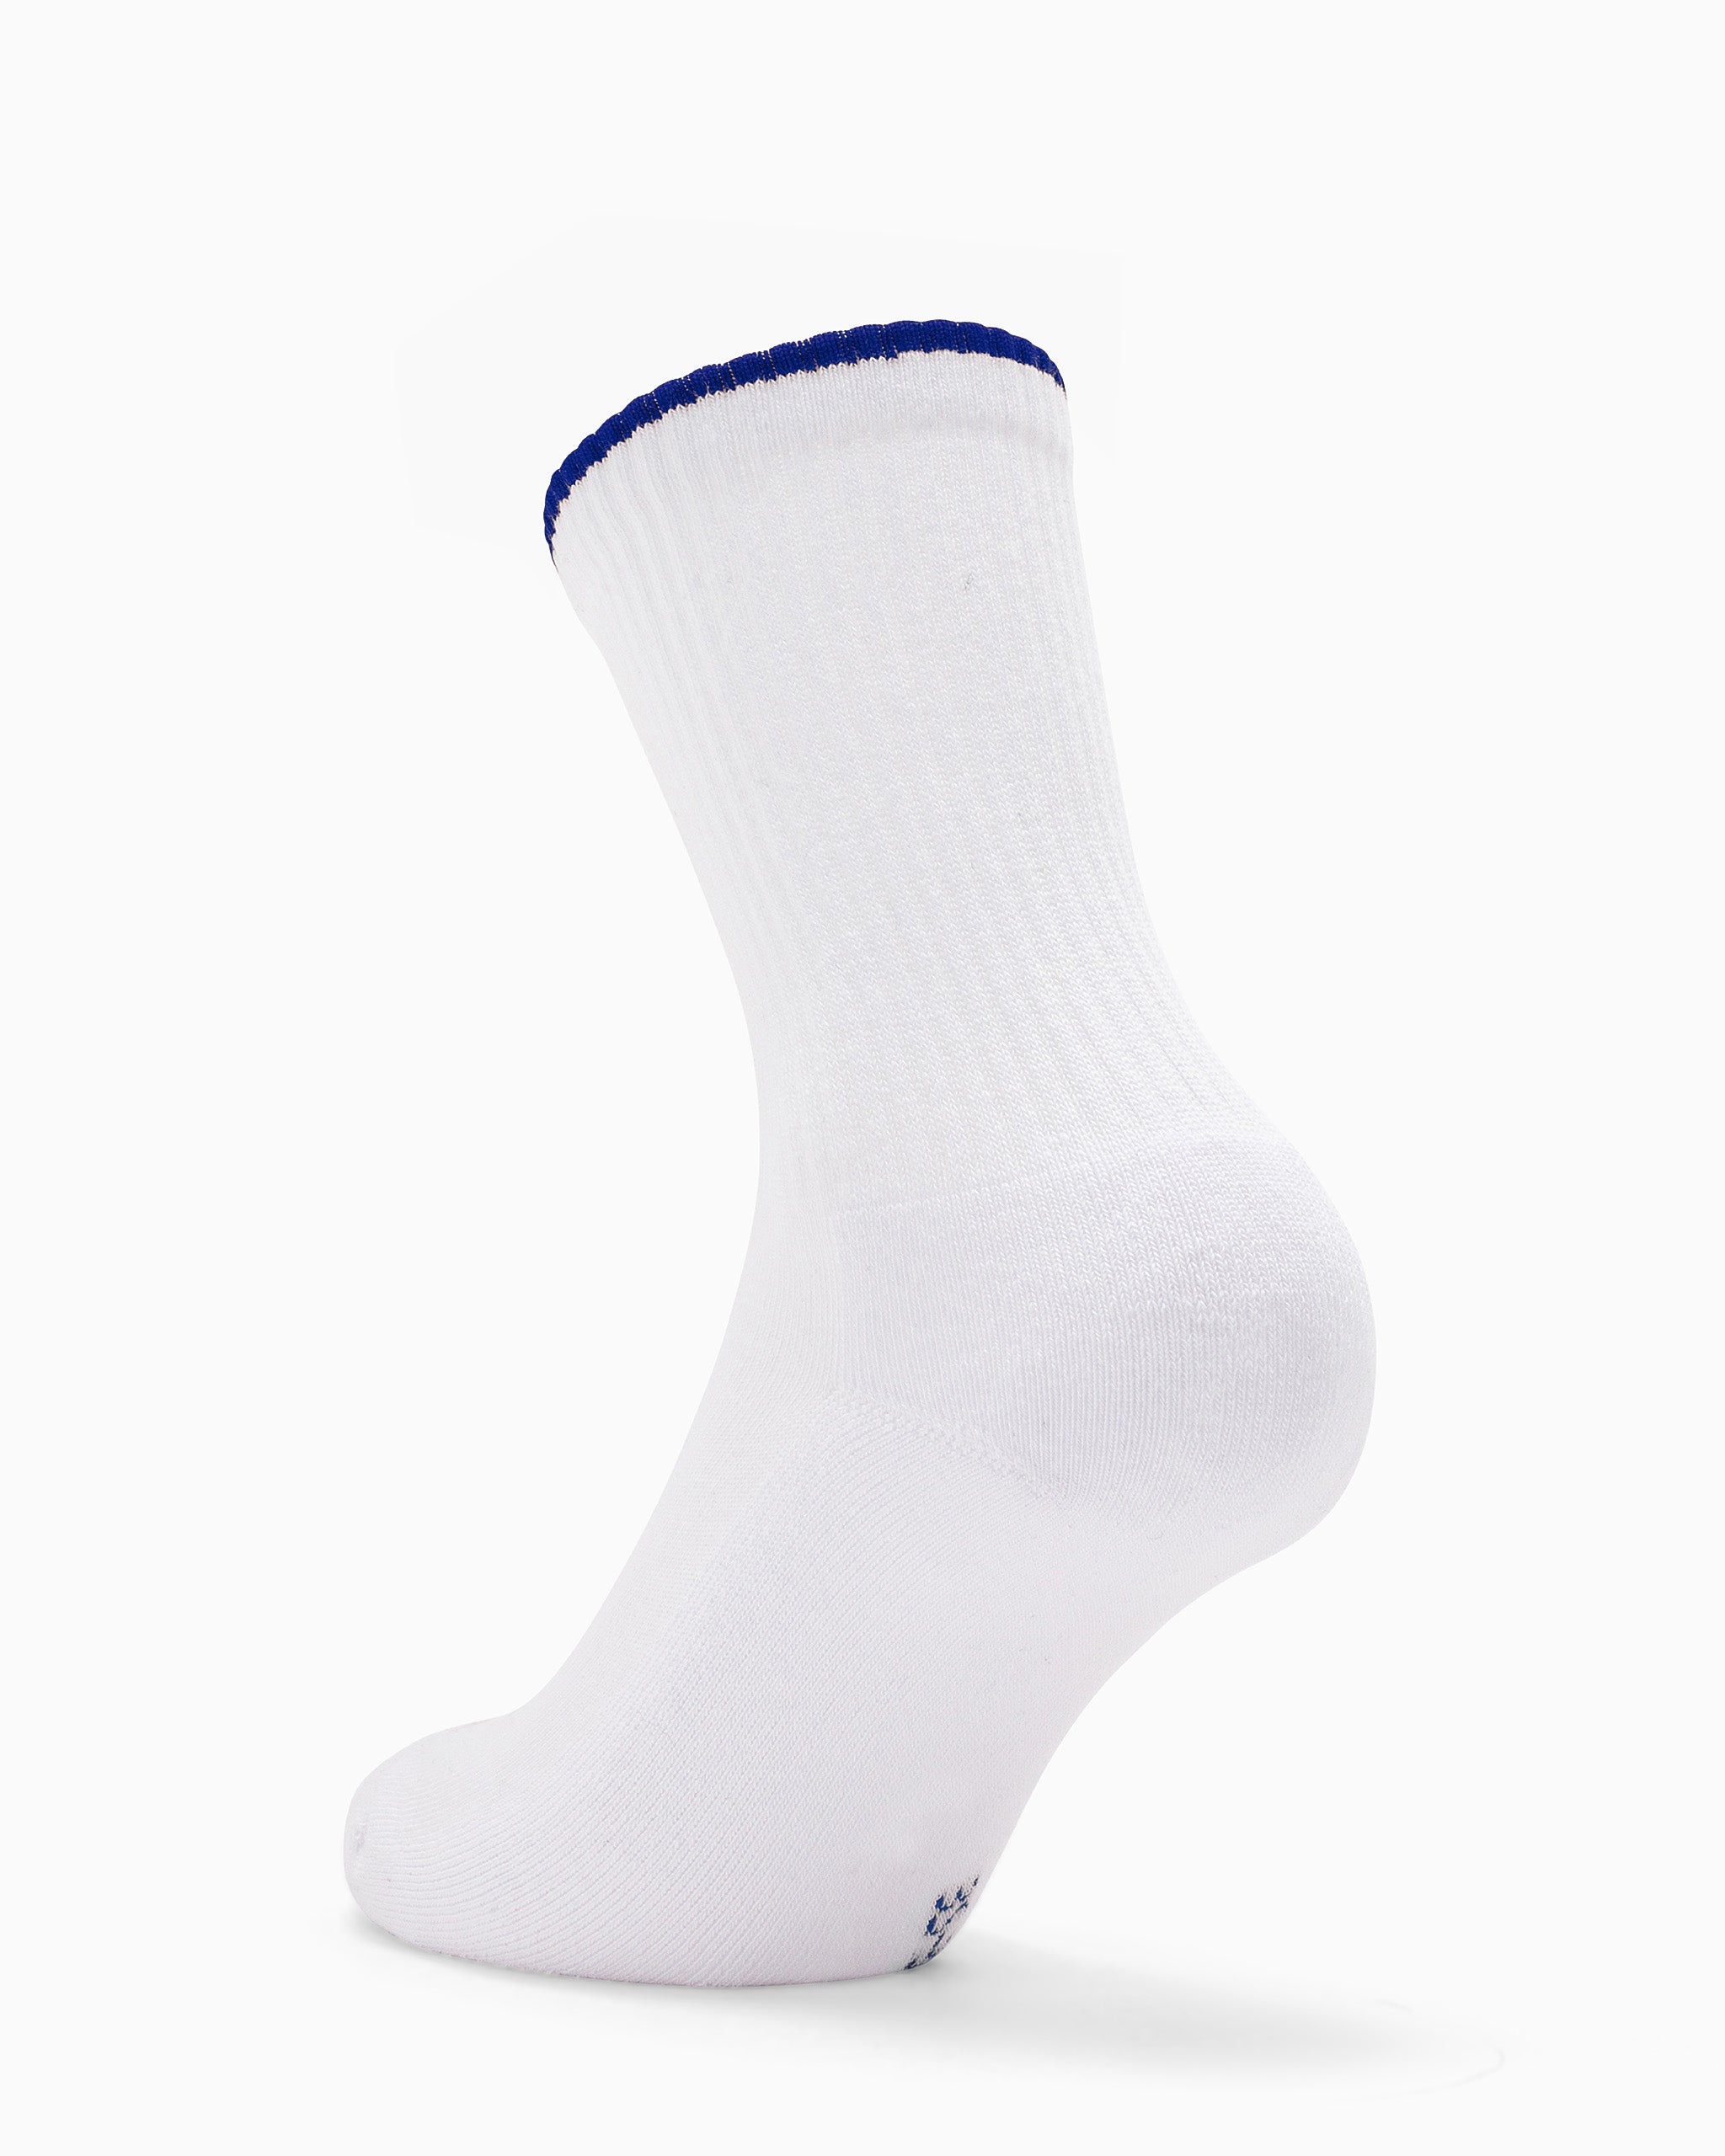 Two-tone unisex tennis socks